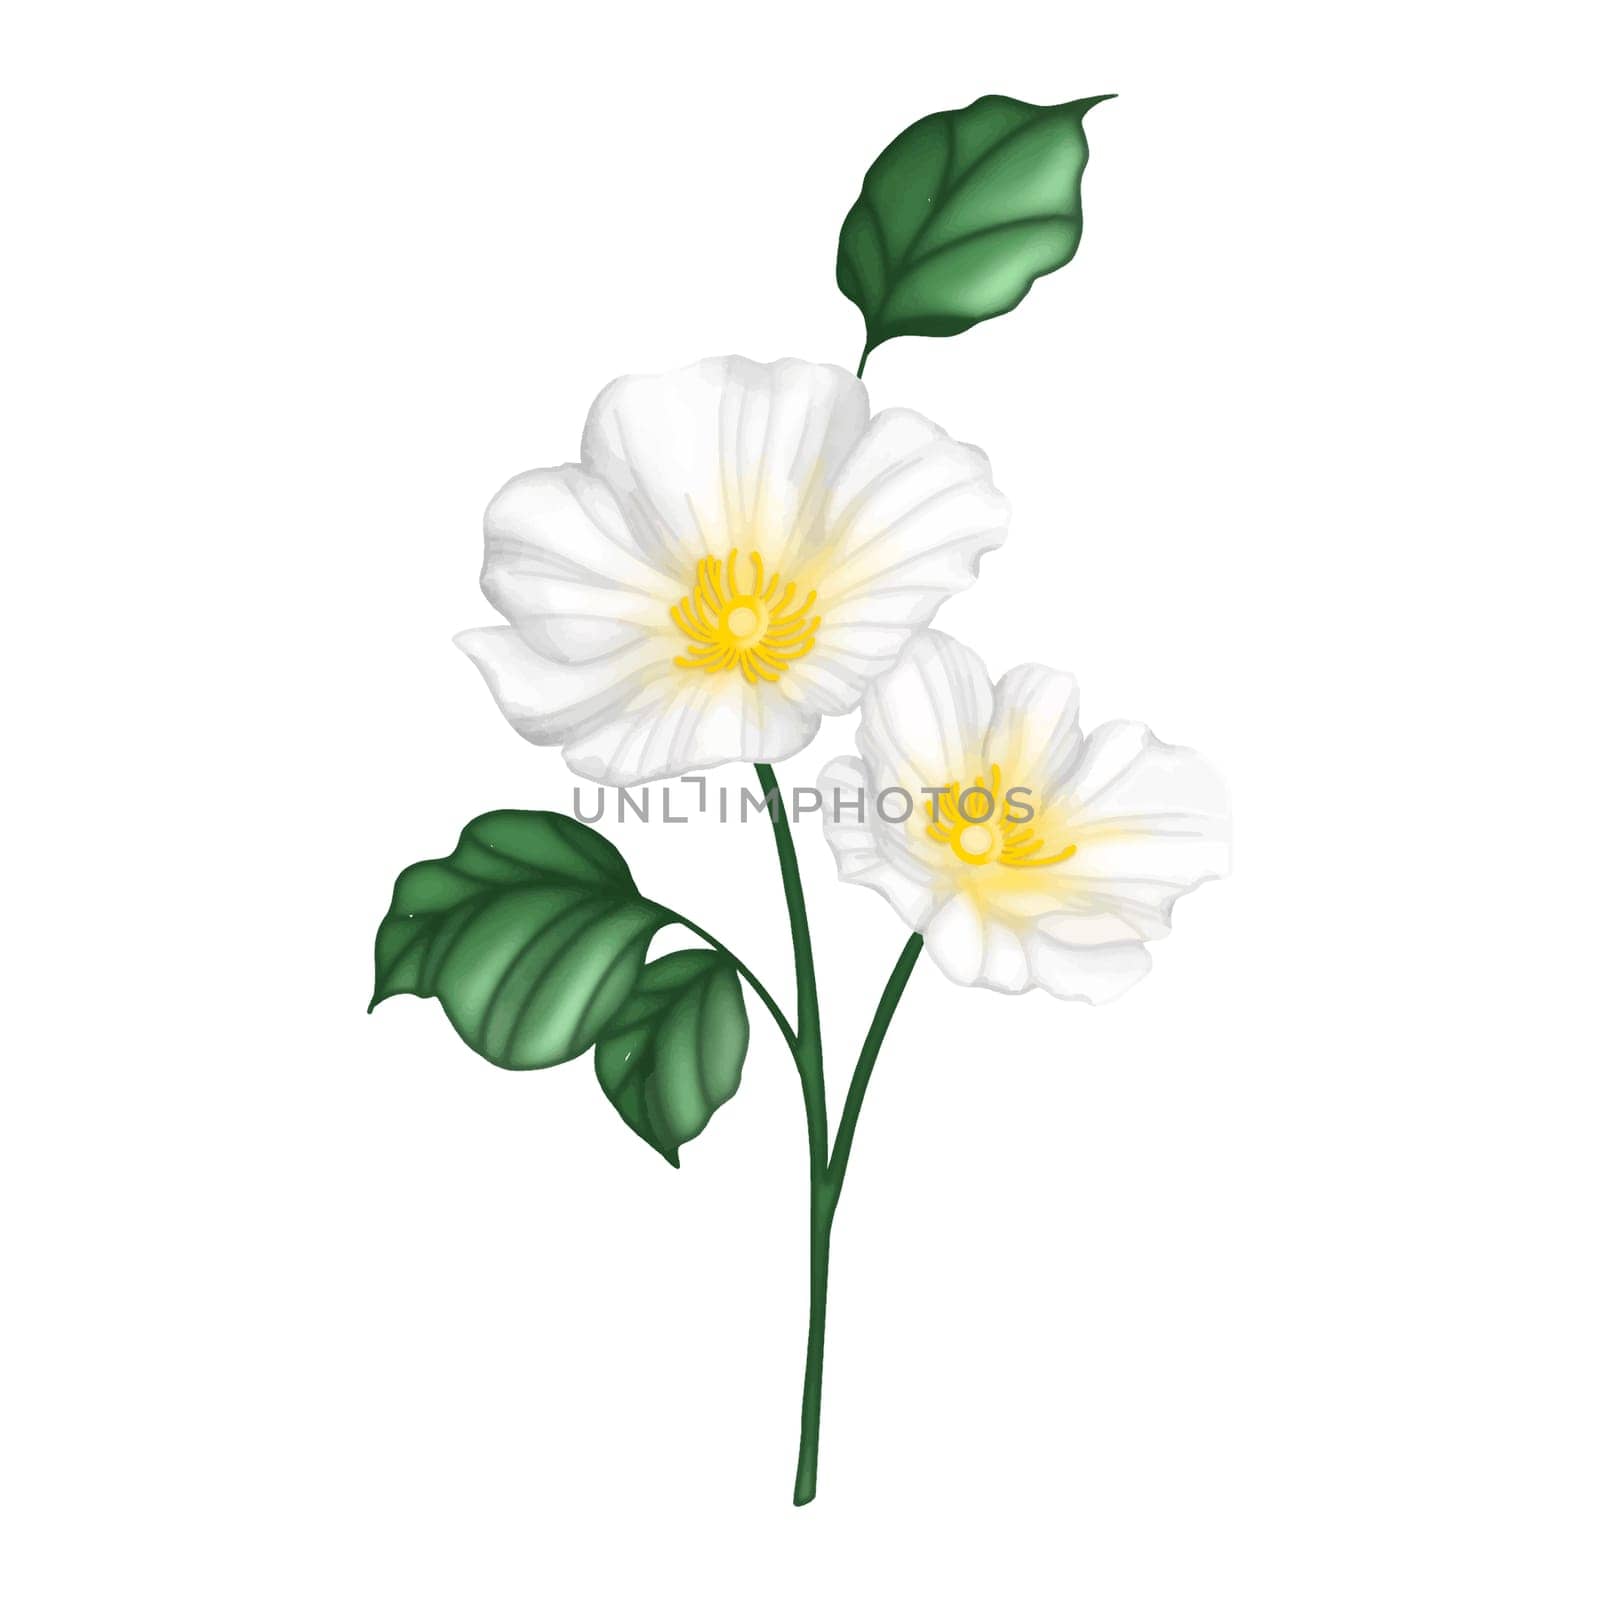 Primrose flower with green leaves winter flower design element isolated on white background. by Skyecreativestudio